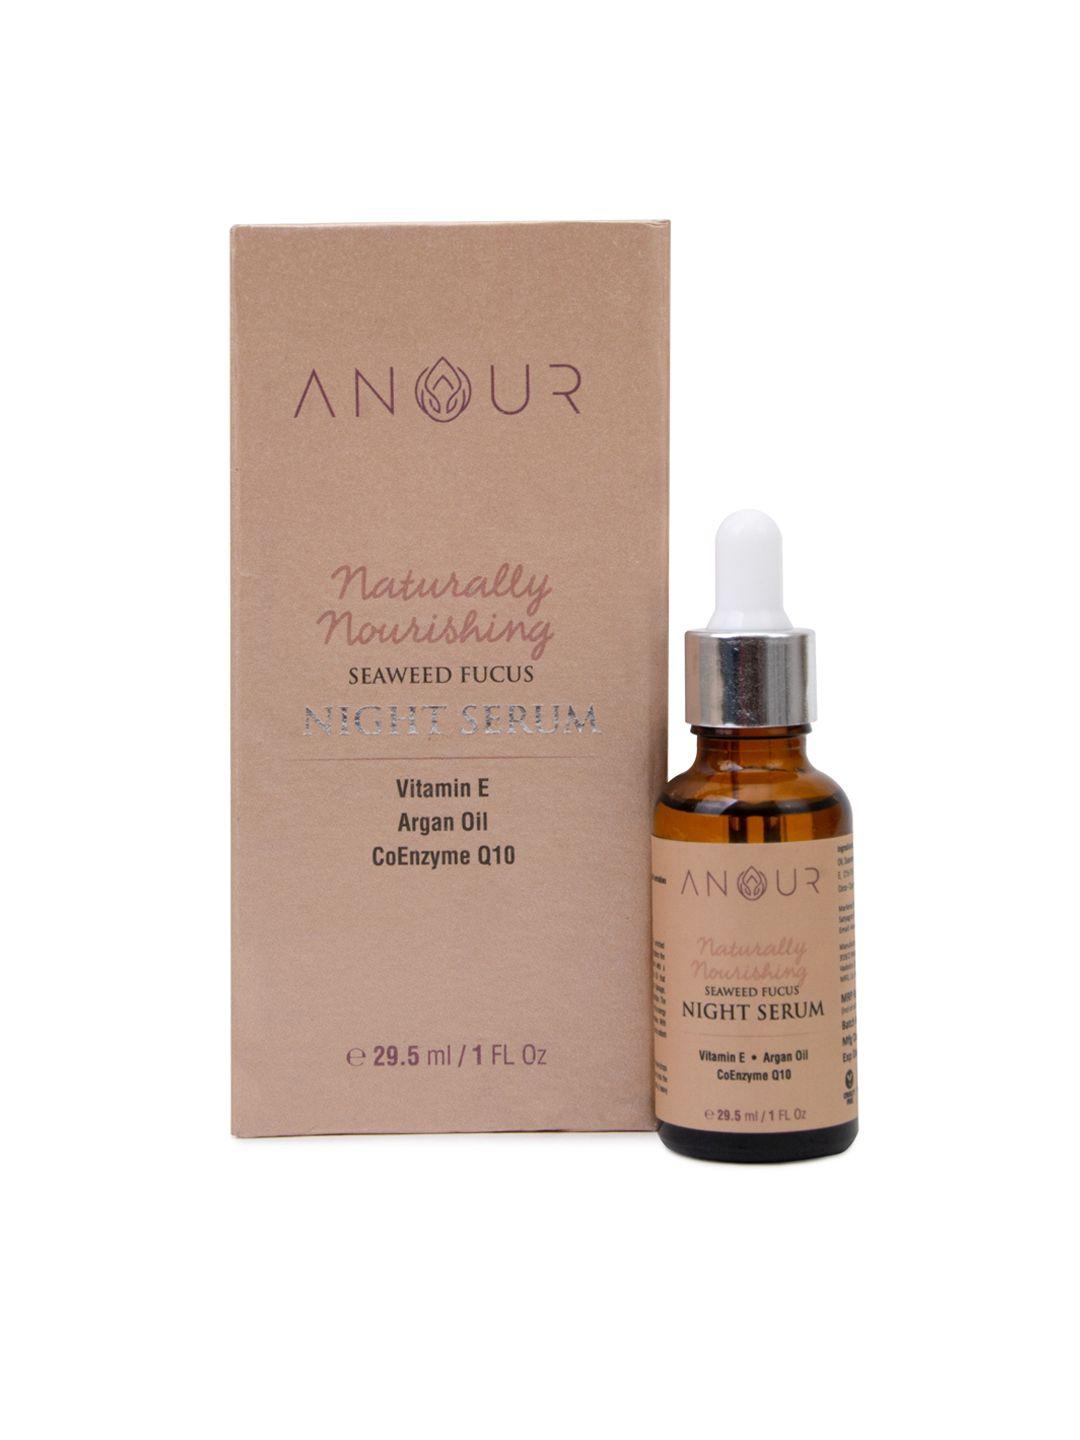 anour naturally nourishing seaweed fucus night serum with vitamin e & argan oil - 29.5ml